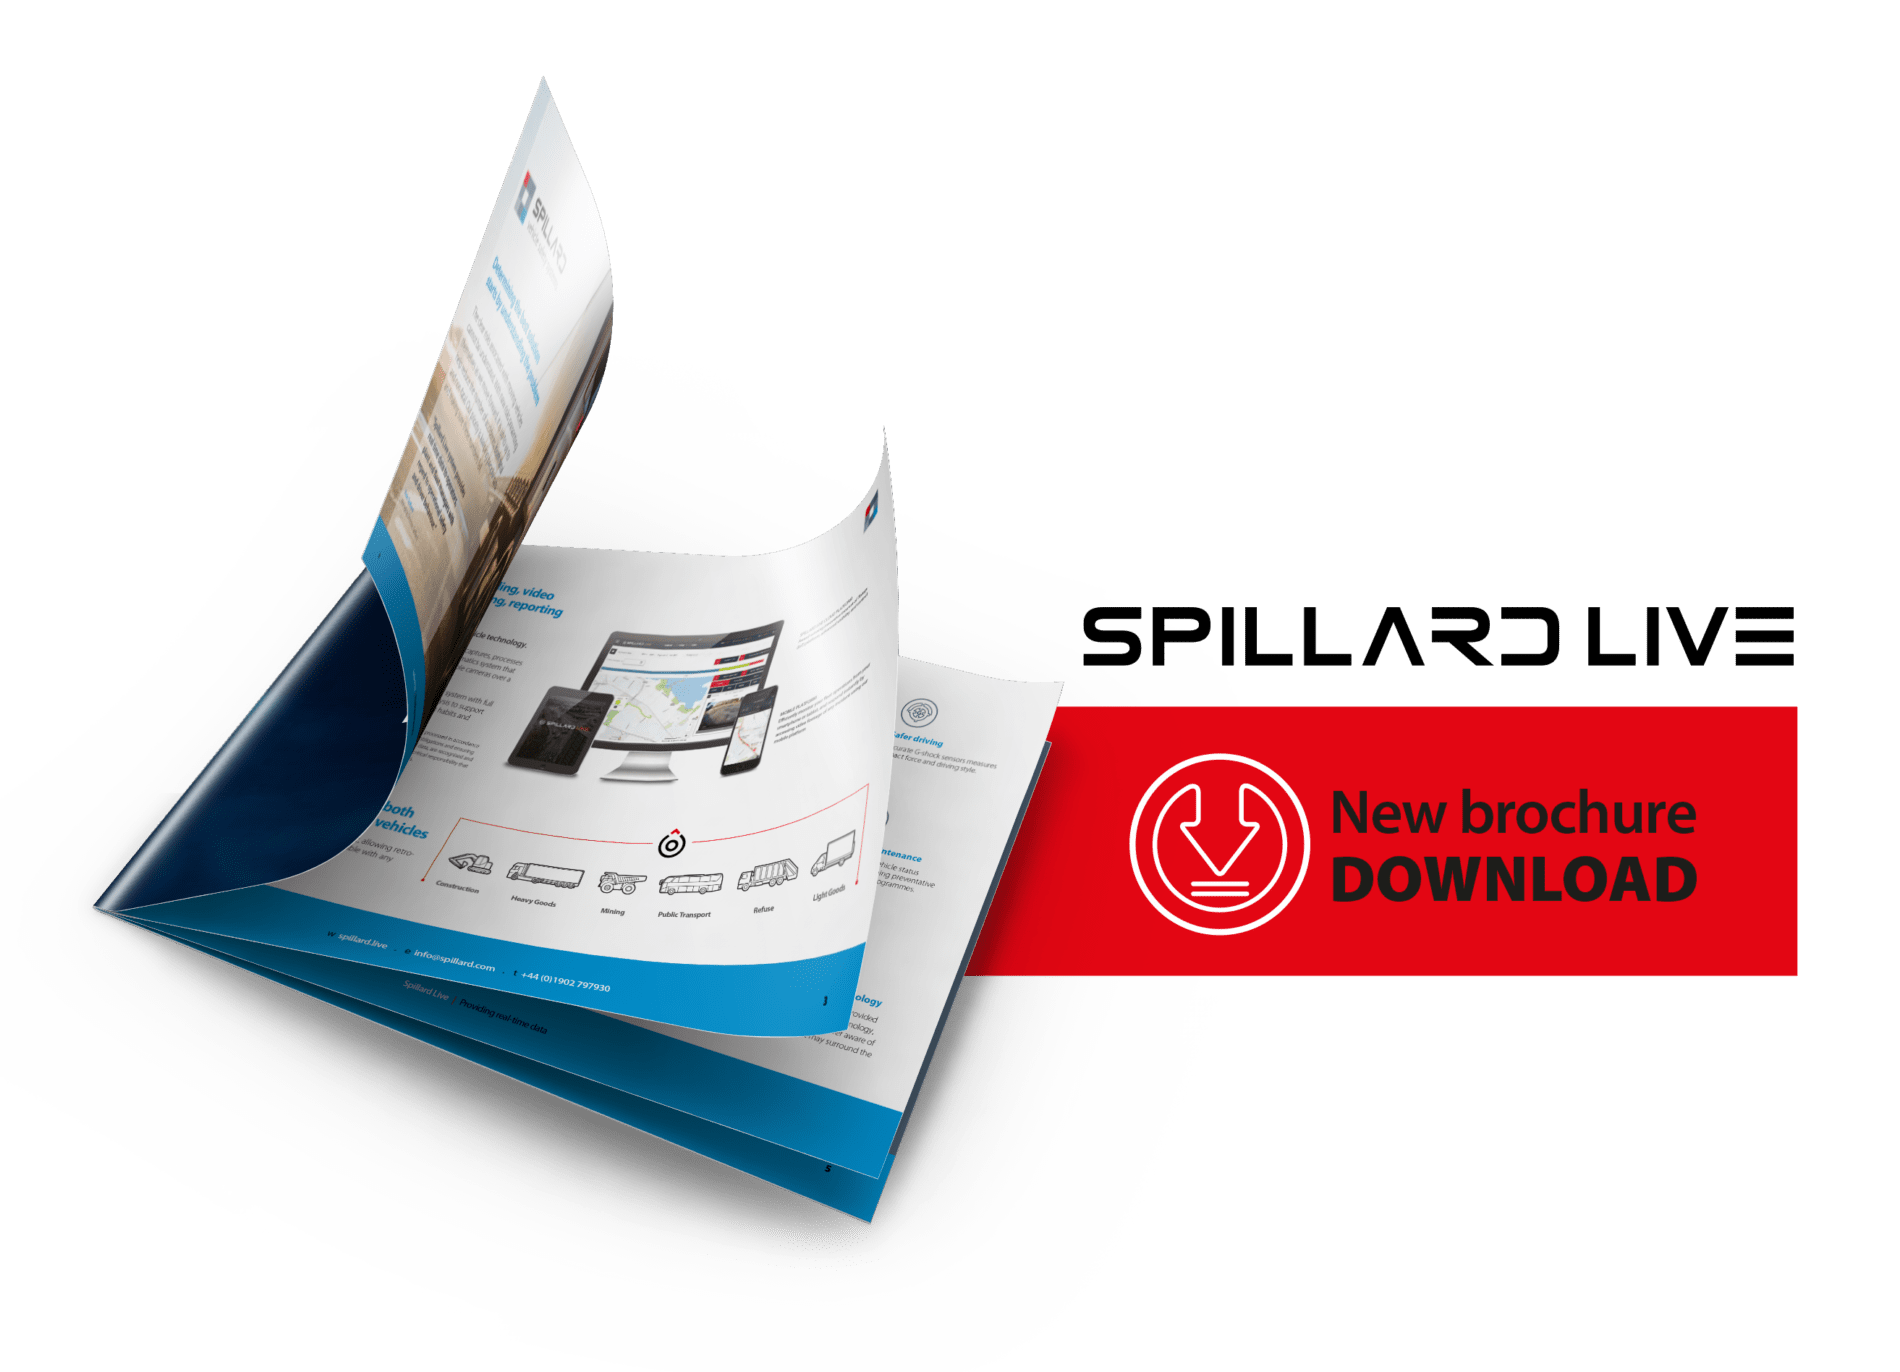 DVS Direct Vision Standard - A4 Spillard LIVE brochure visual